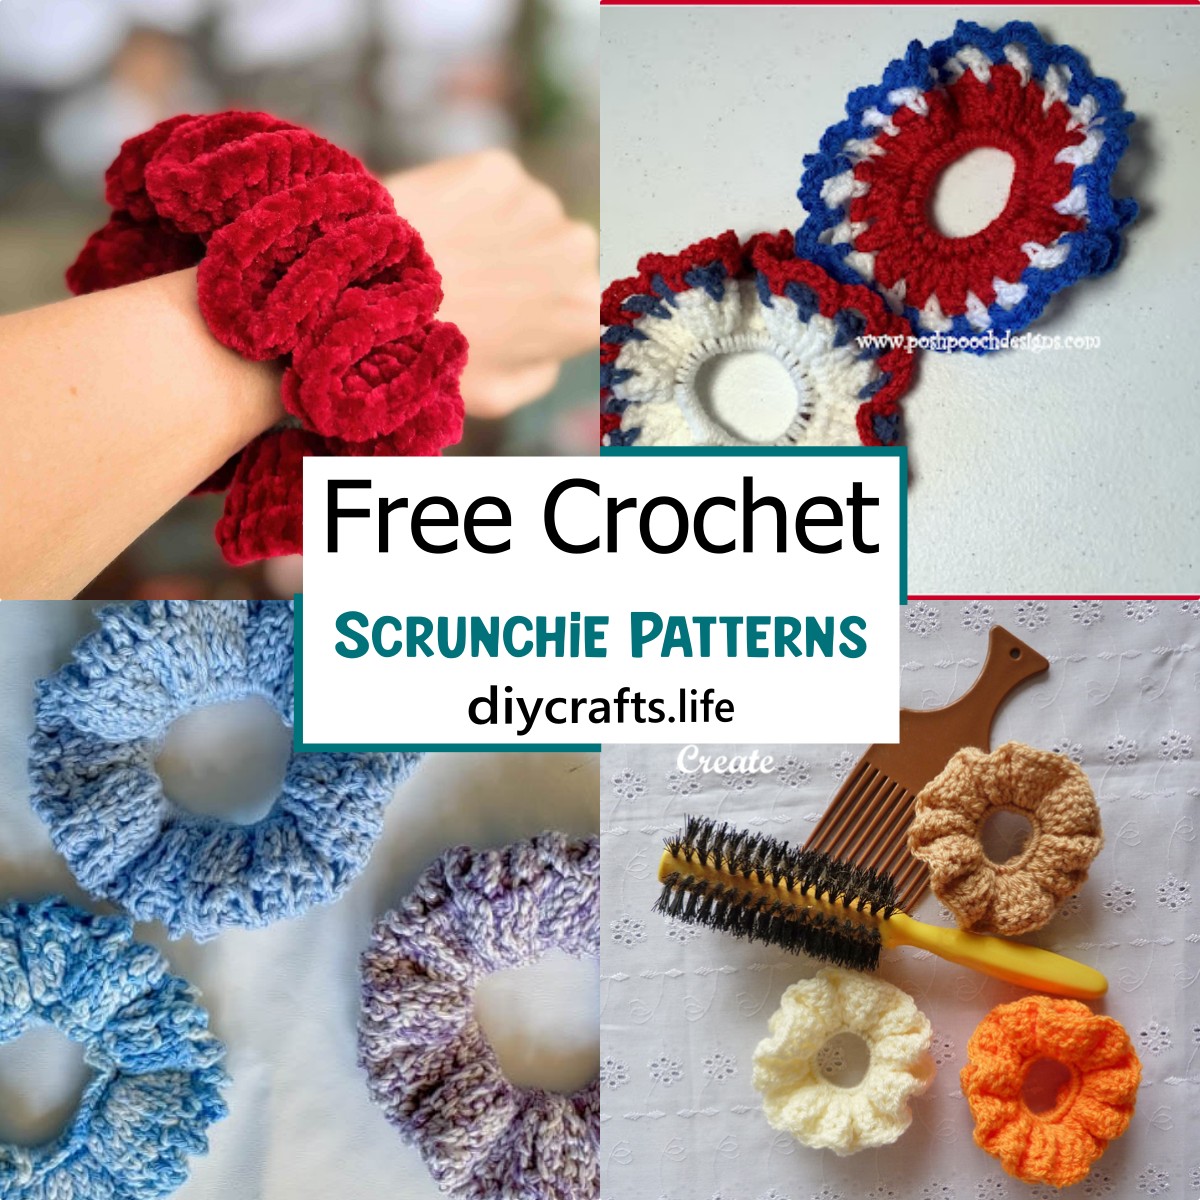 20 Free Crochet Scrunchie Patterns